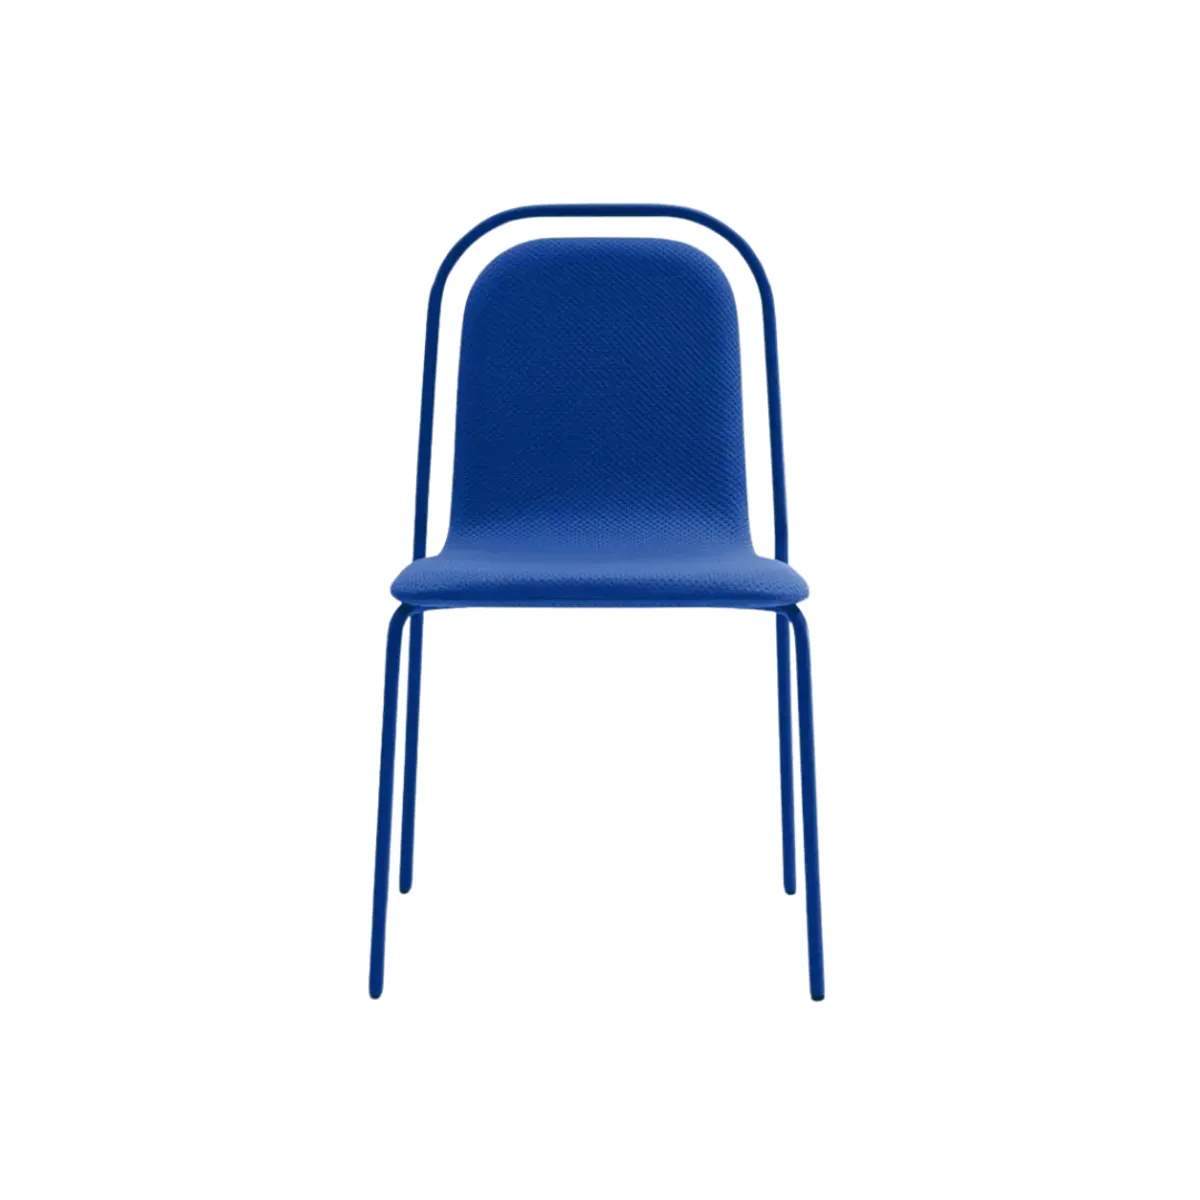 Perth side chair 1